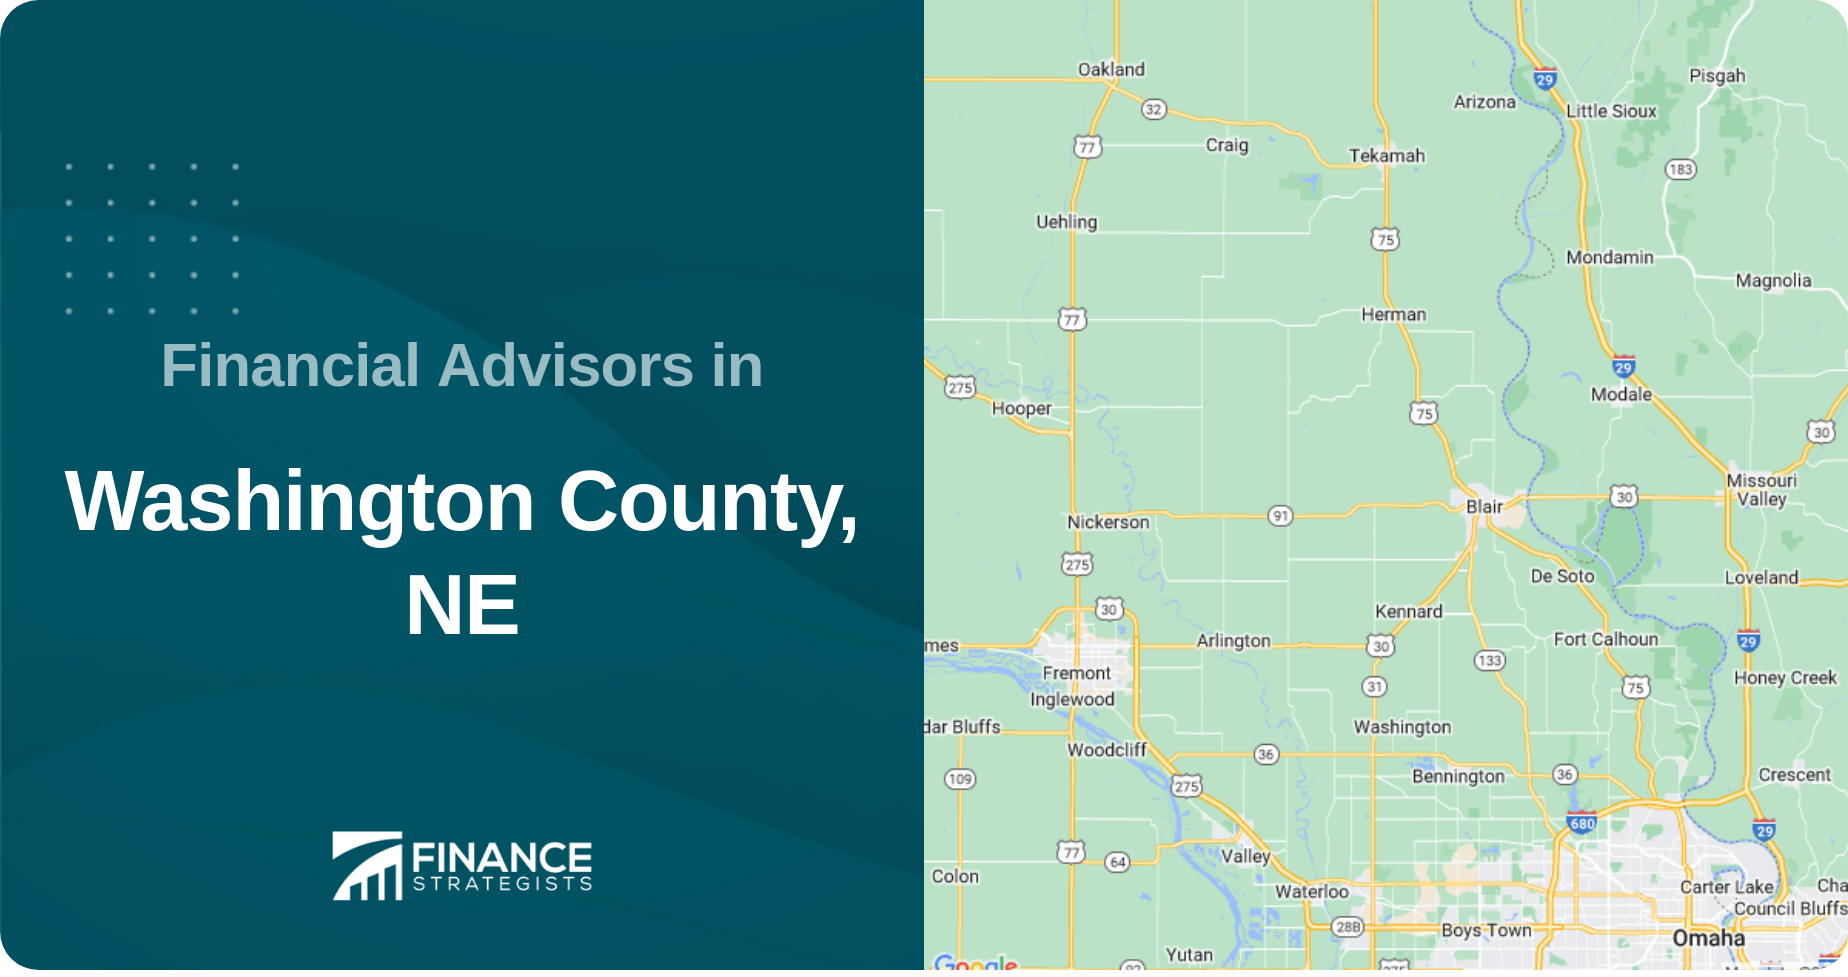 Financial Advisors in Washington County, NE